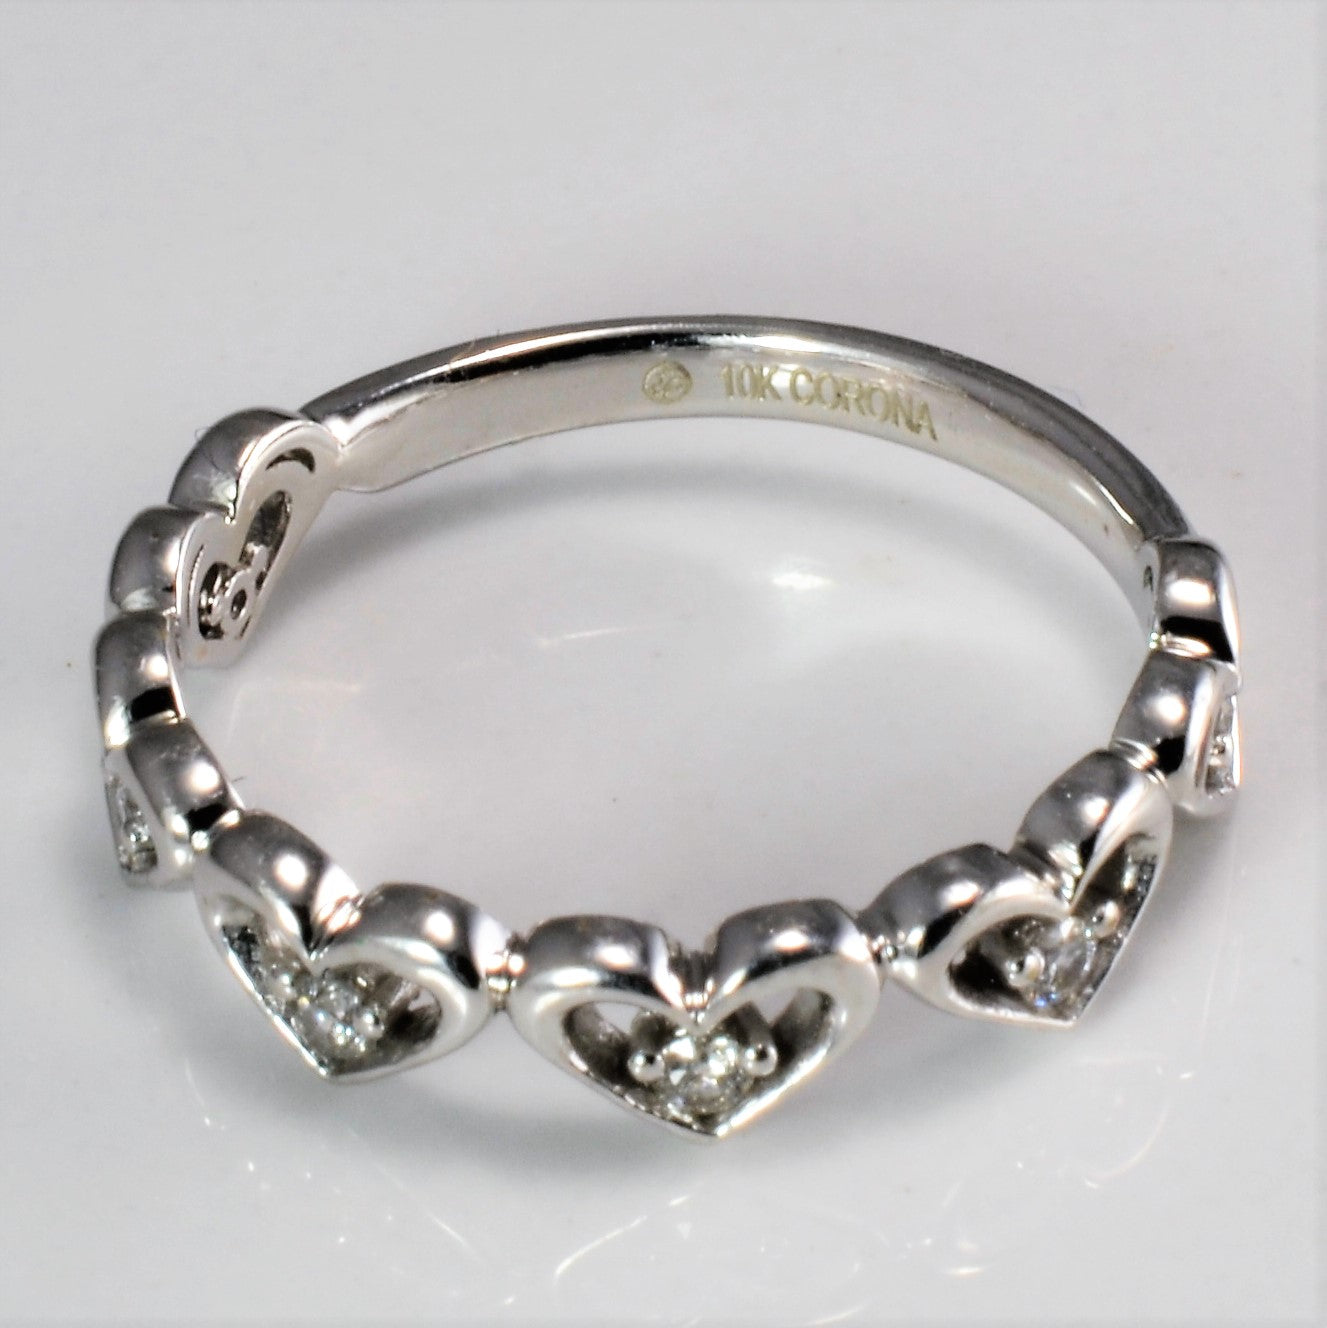 Heart Design Diamond Promise Ring | 0.09 ctw, SZ 6.5 |